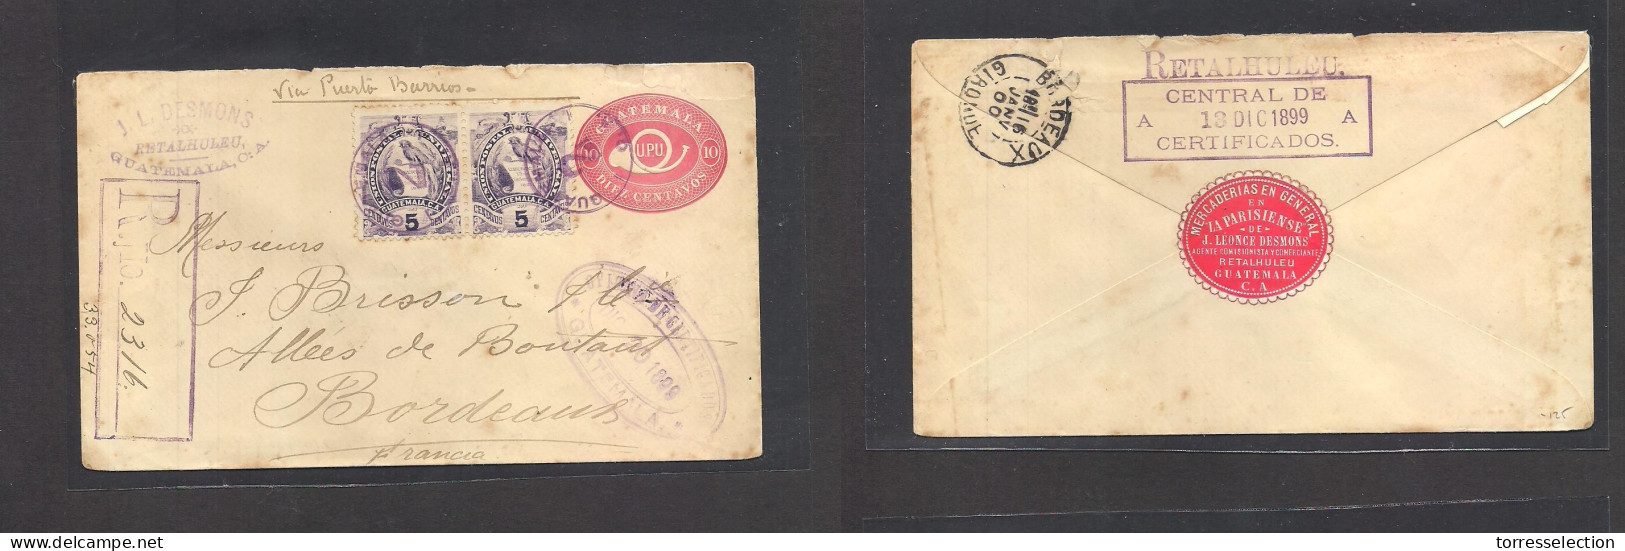 GUATEMALA. 1899 (20 Dic) Retalhuleu - France, Bordeaux (16 Jan 1900) Registered 10c Red Stat Env + 2 Adtls, Tied "2" GPO - Guatemala